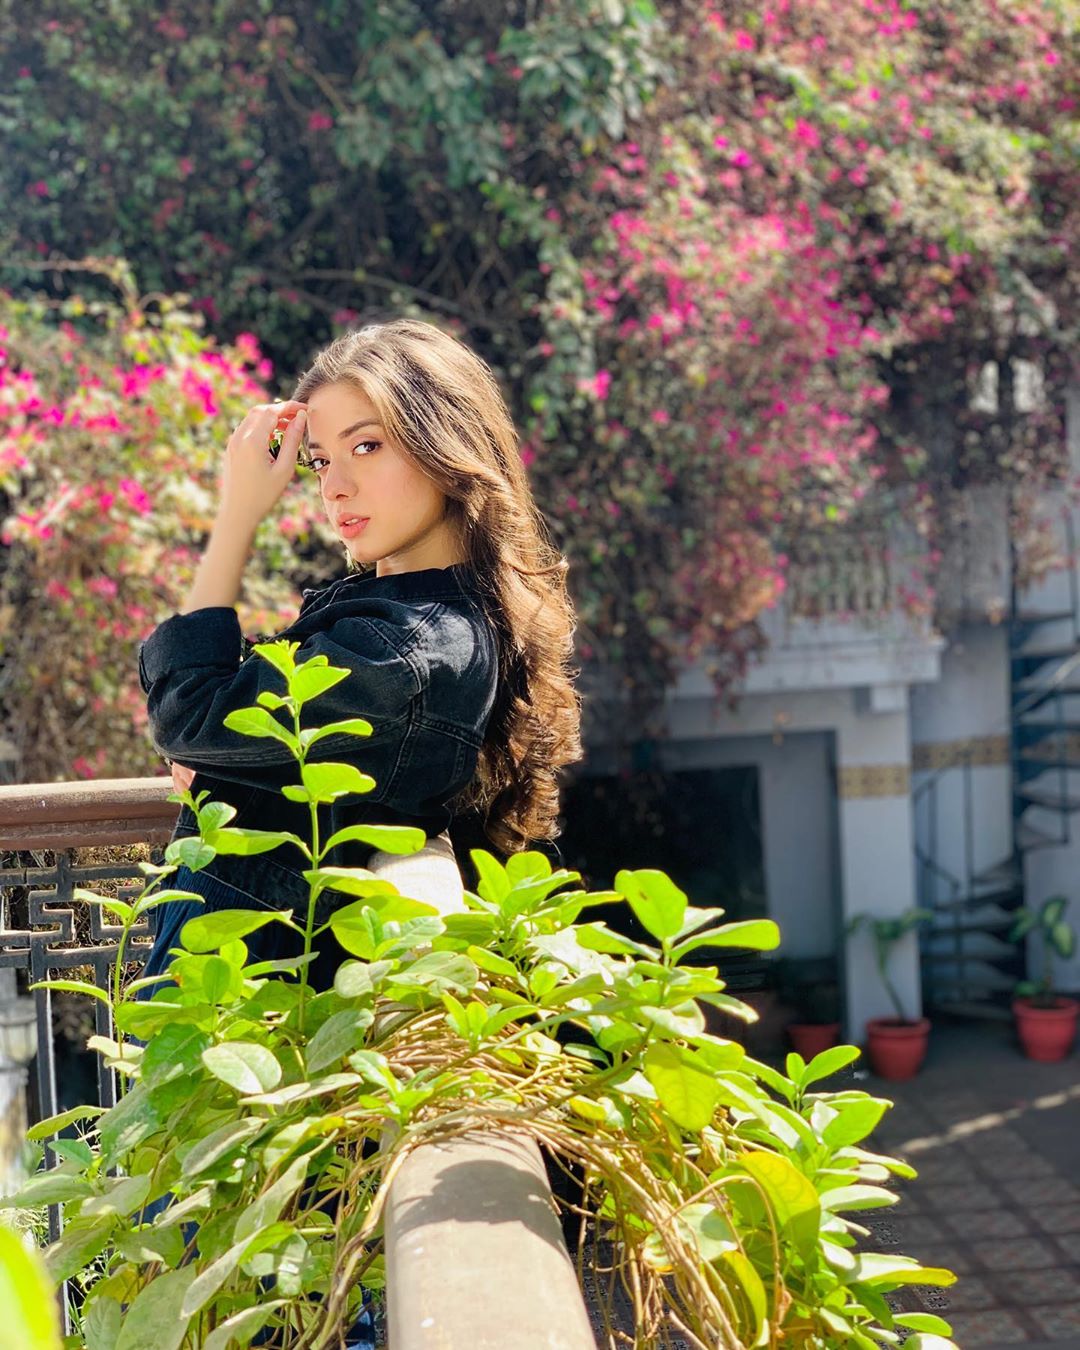 Arisha Razi Khan Latest Pictures from her Instagram